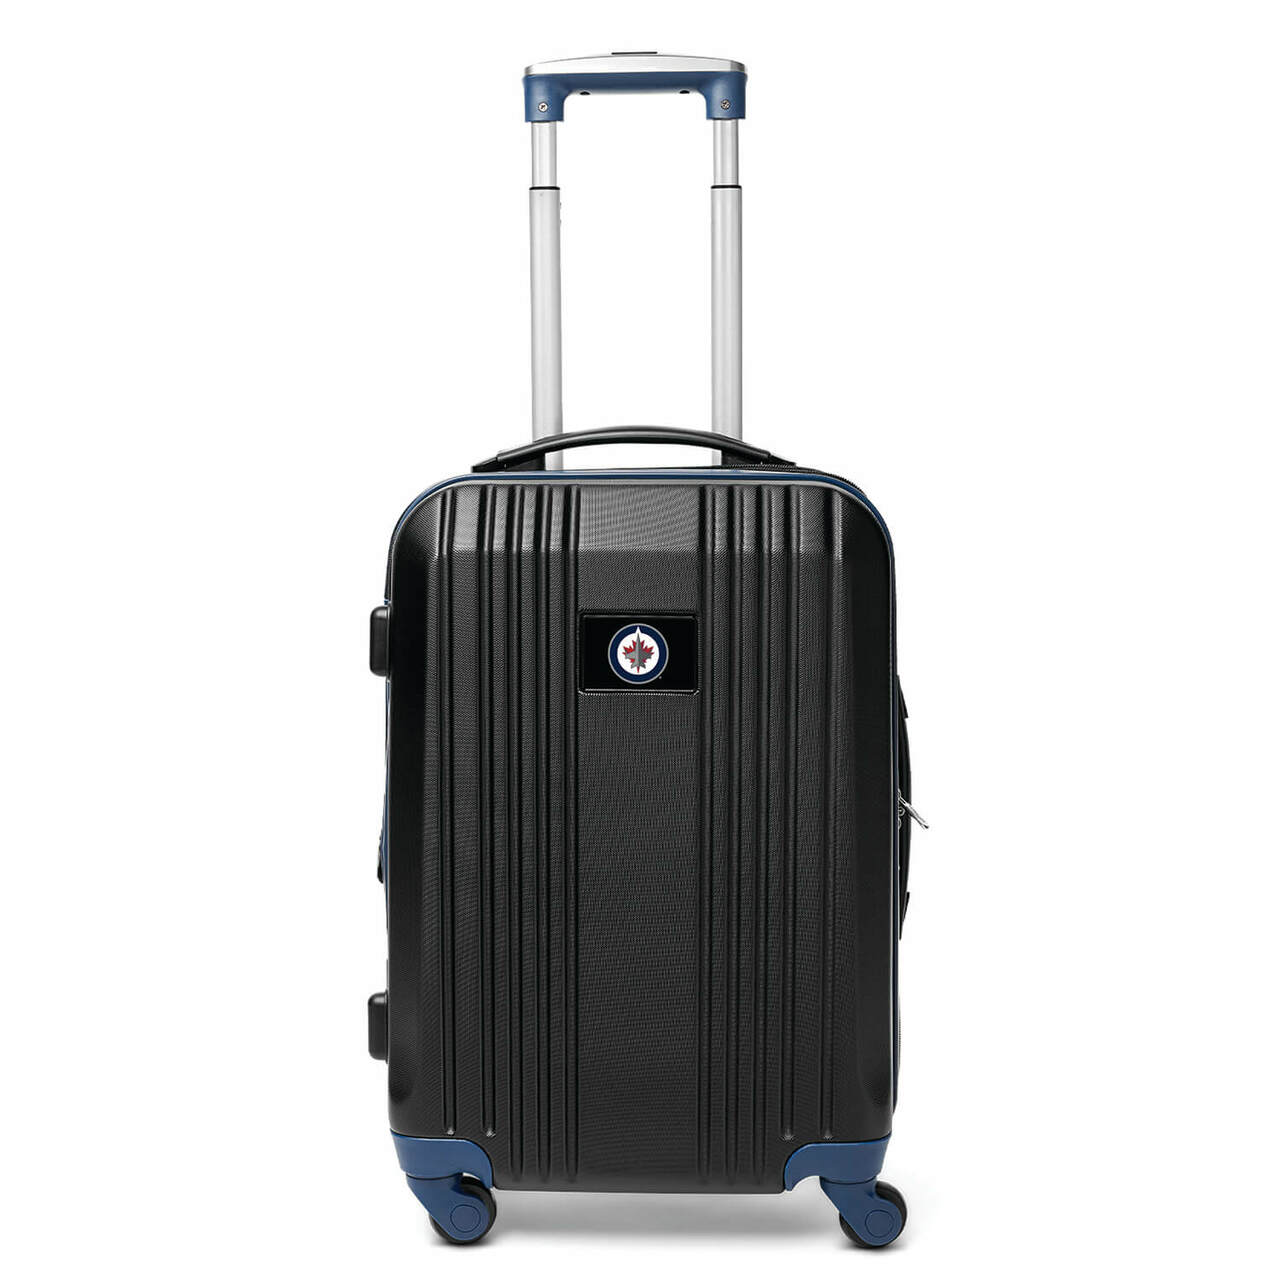 Jets Carry On Spinner Luggage | Winnipeg Jets Hardcase Two-Tone Luggage Carry-on Spinner in Navy